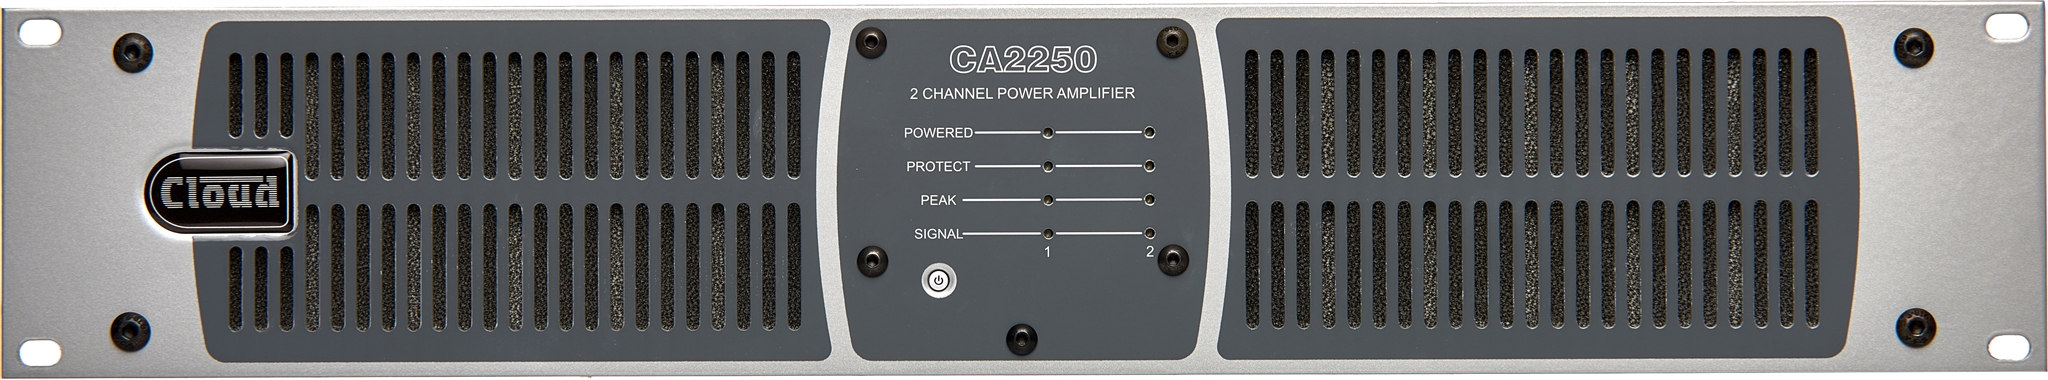 2 Channel Amplifier 250w Per Output Channel - CLOUD (ENGLAND) _ CA2250